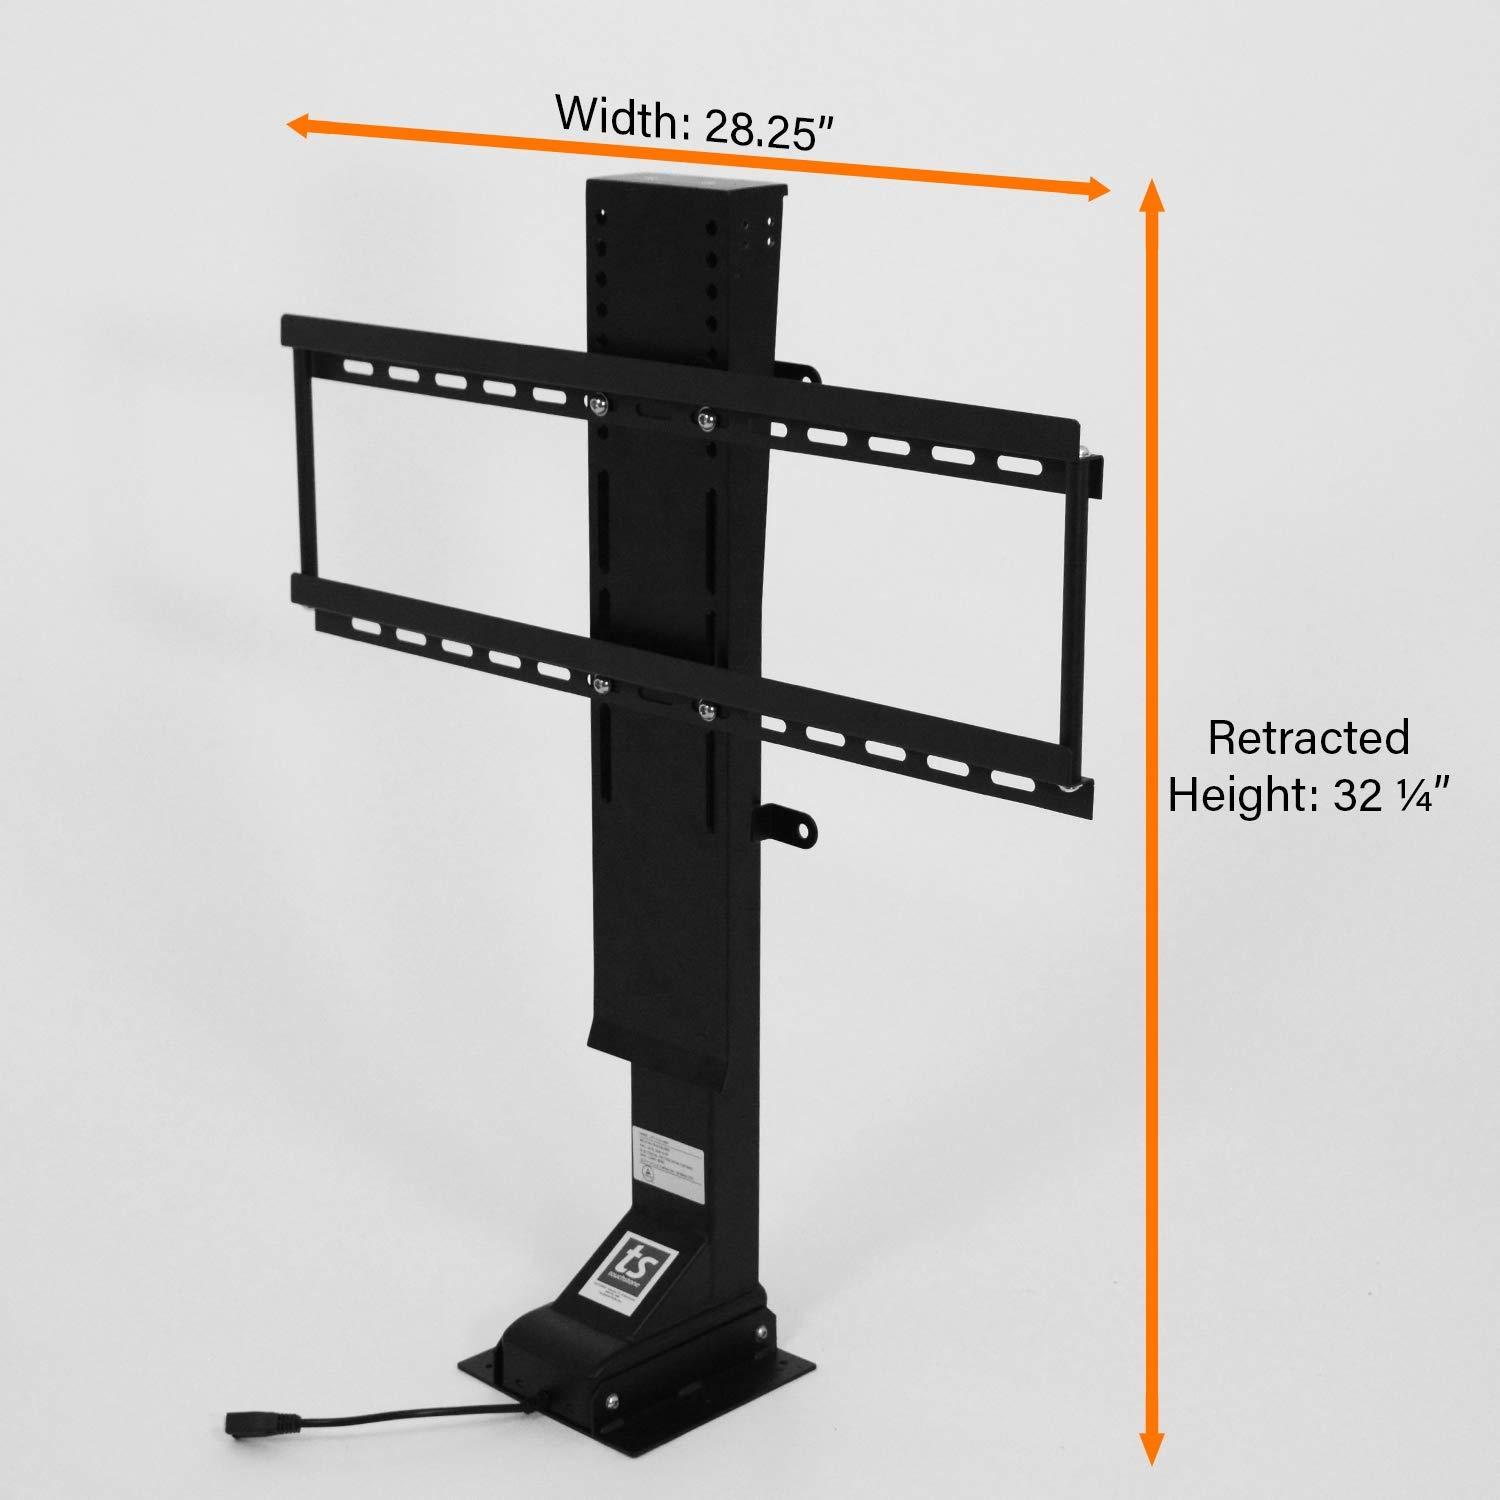 SRV 33900 Pro TV Lift Mechanism measurements.